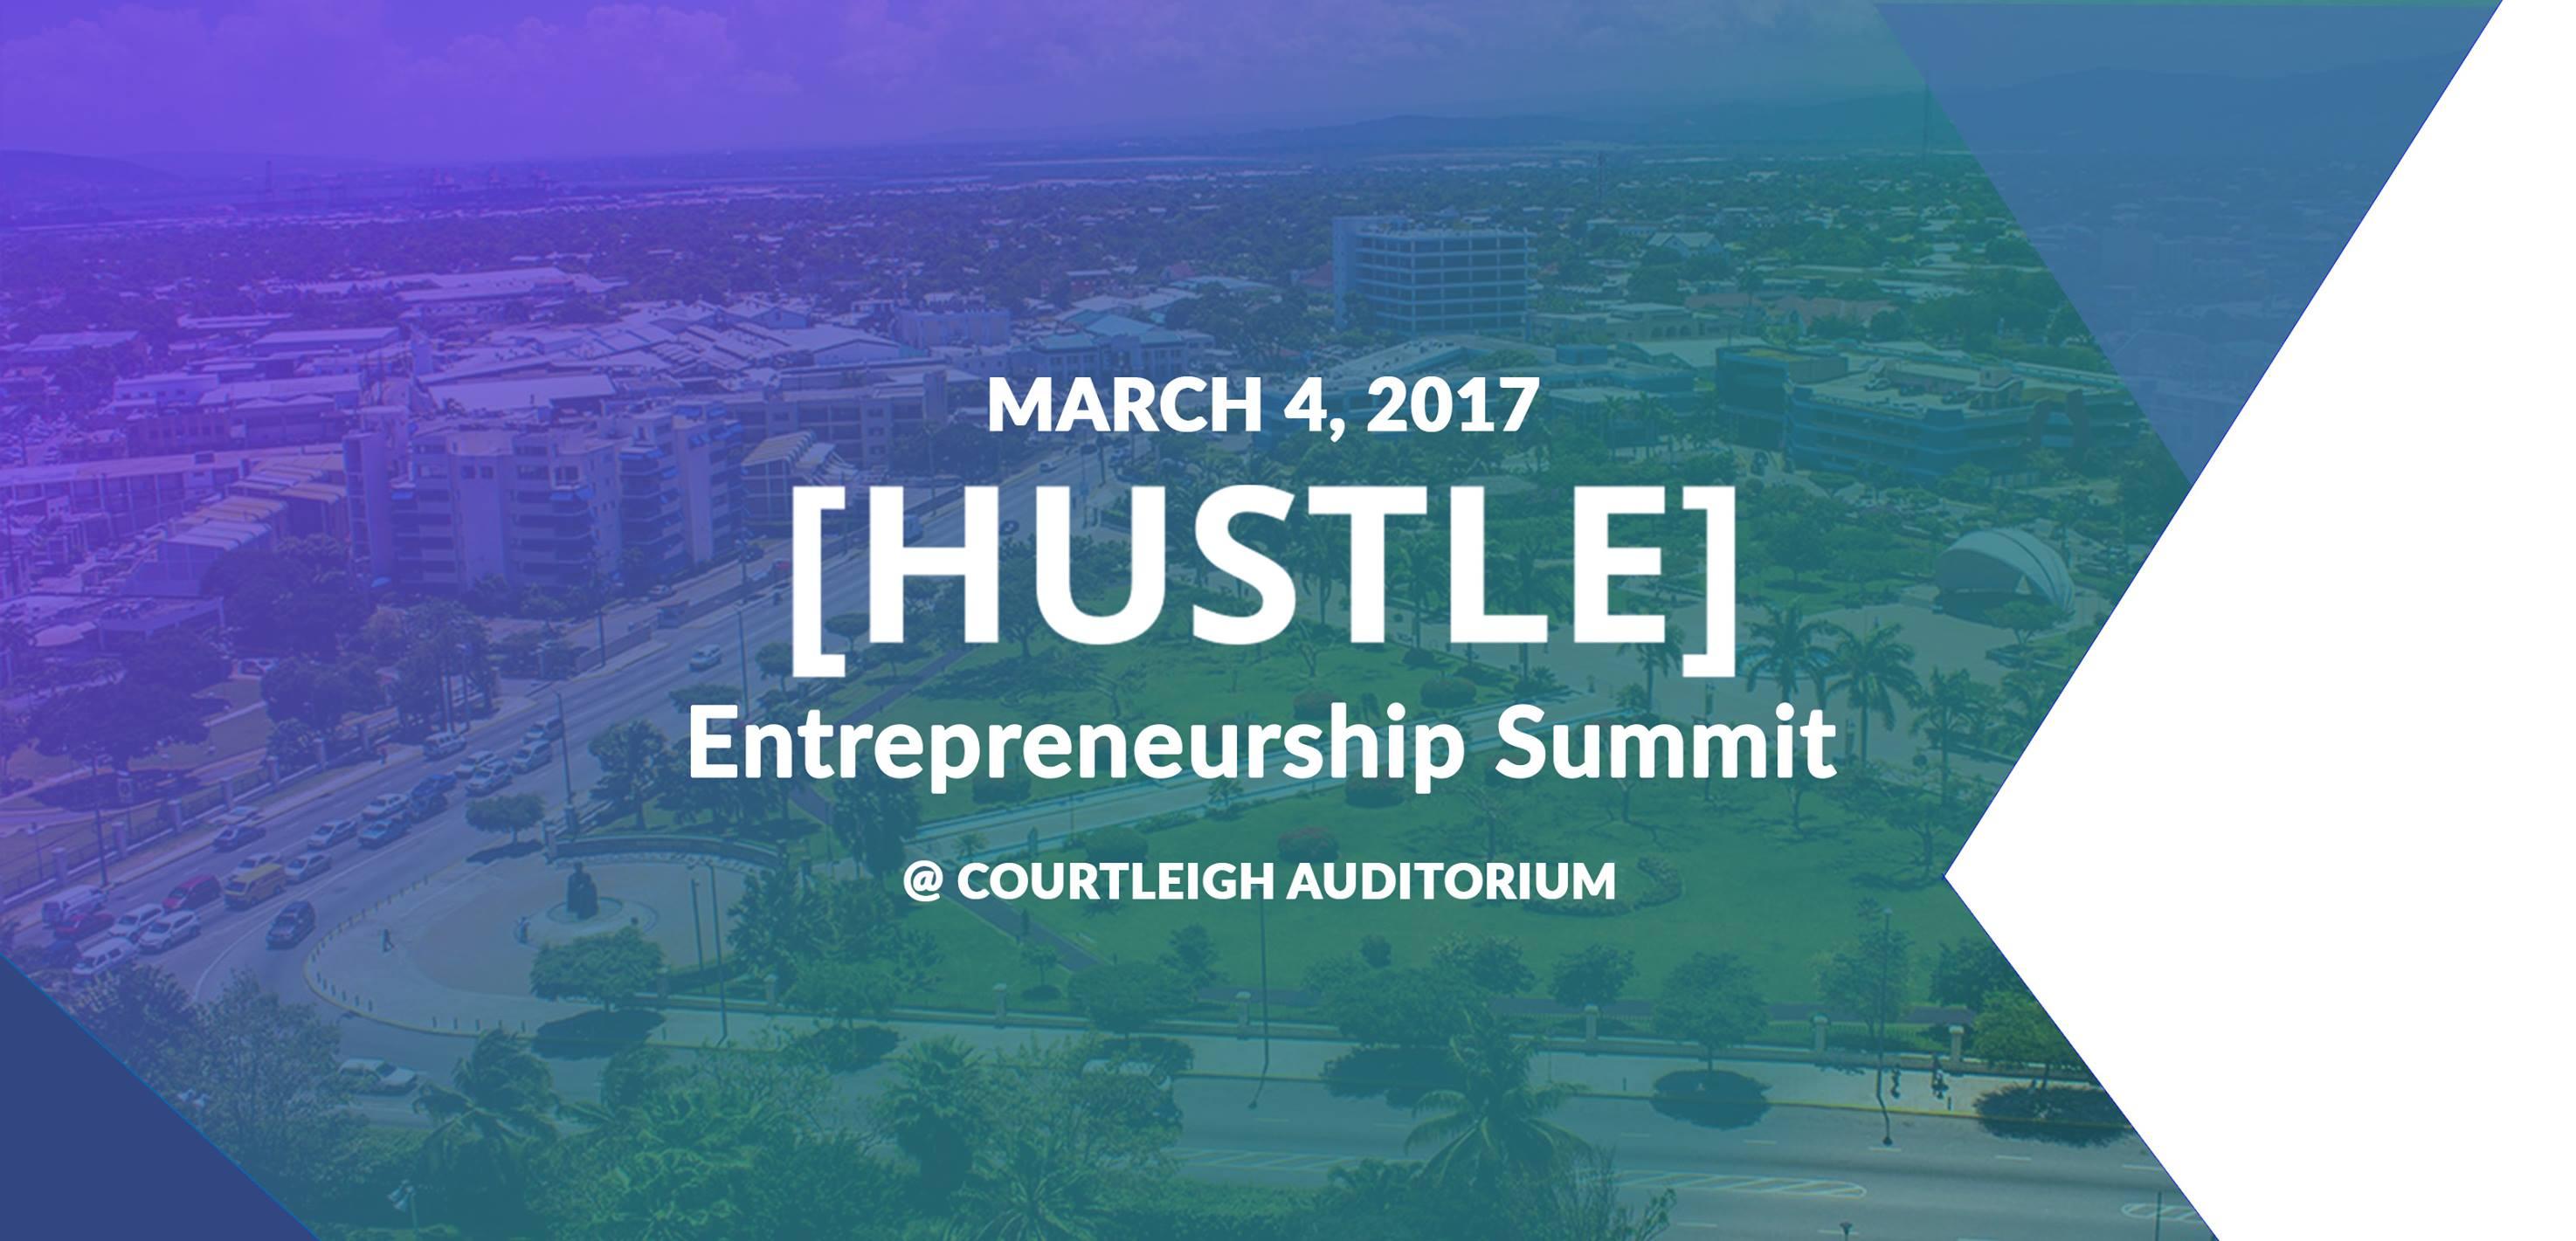 Hustle - The Entrepreneur Summit